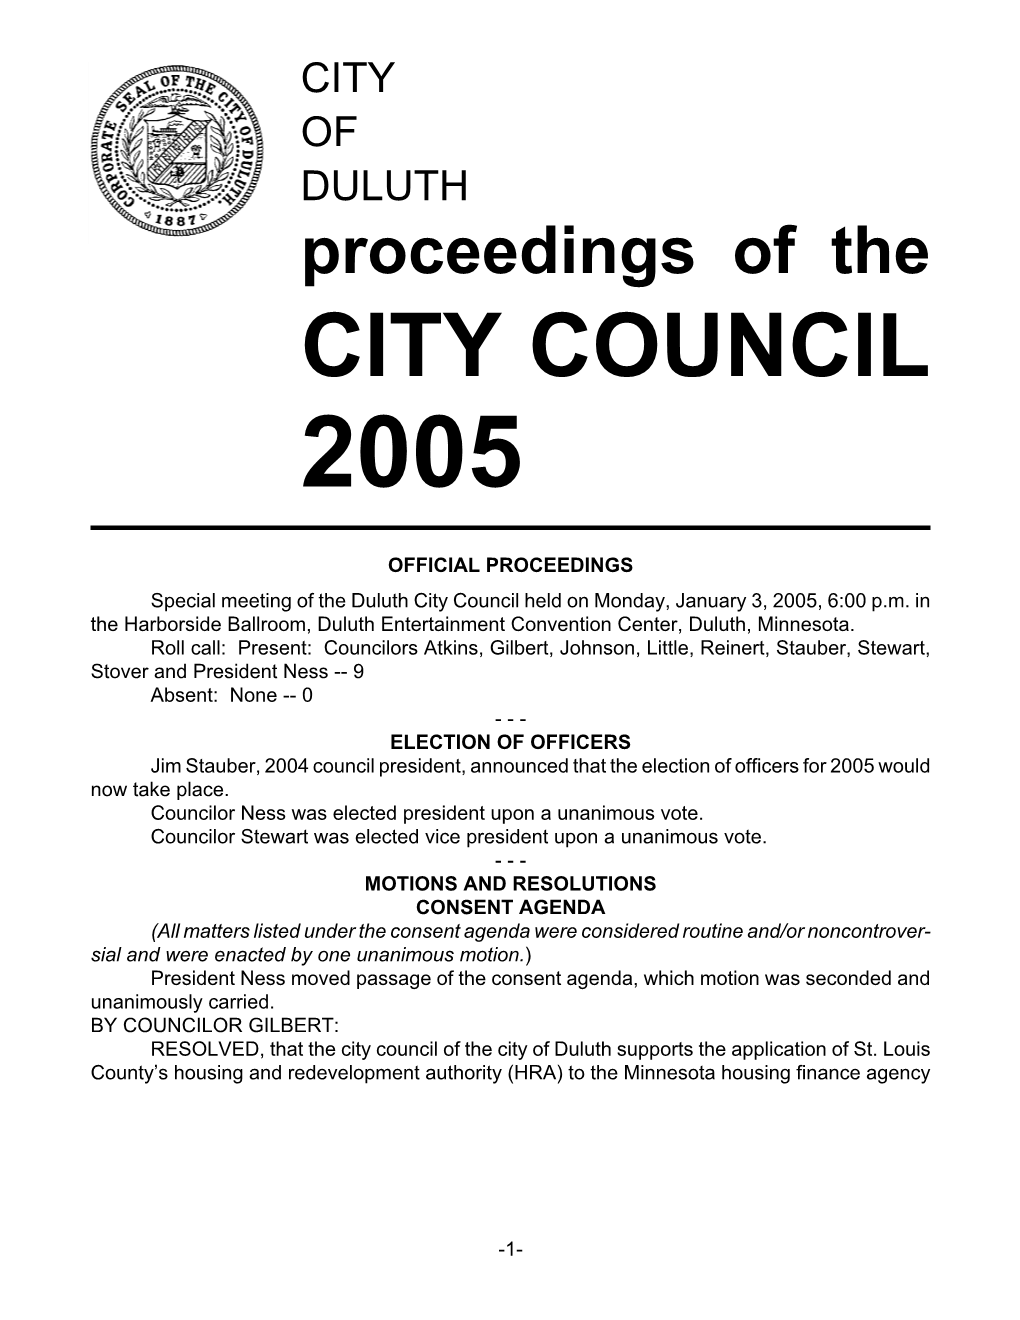 2005 City Council Minutes